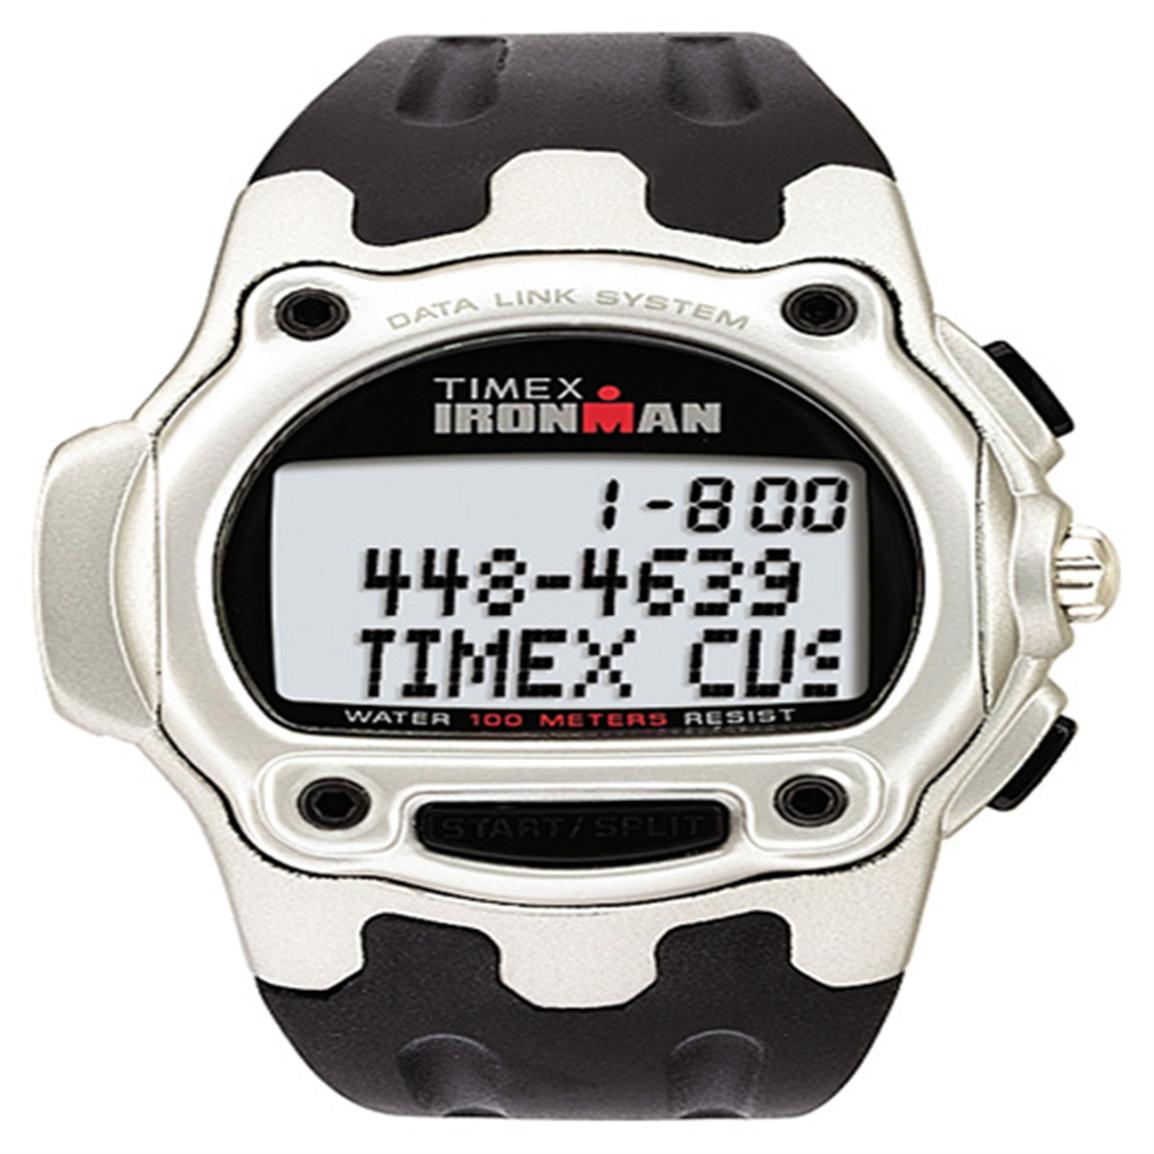 timex ironman watch manual pdf